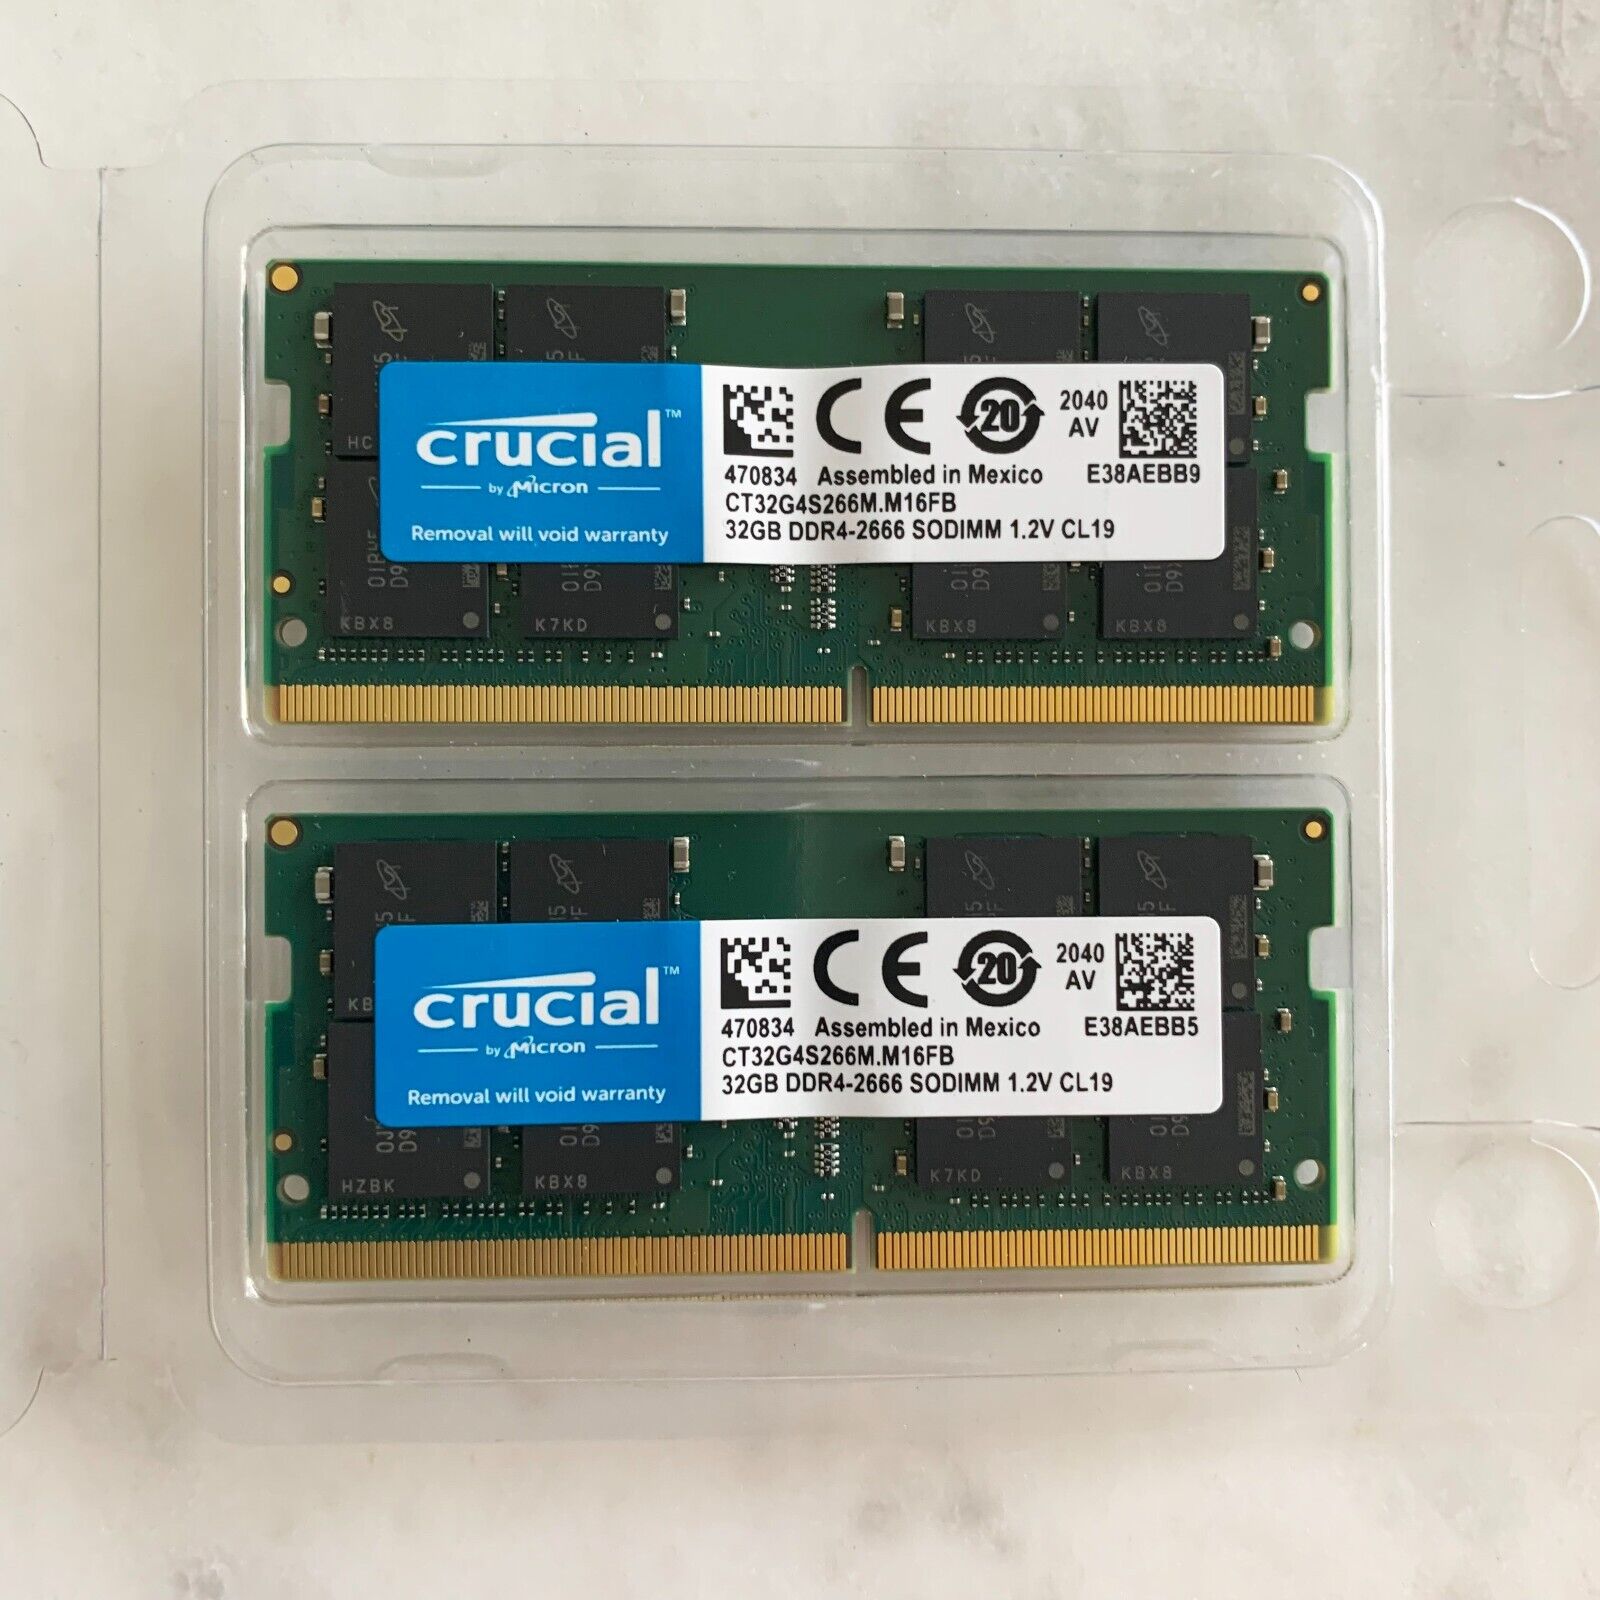 Crucial RAM 64GB Kit (2 x 32GB) DDR4 2666MHz SODIMM 1.2V CL 19 Laptop Memory